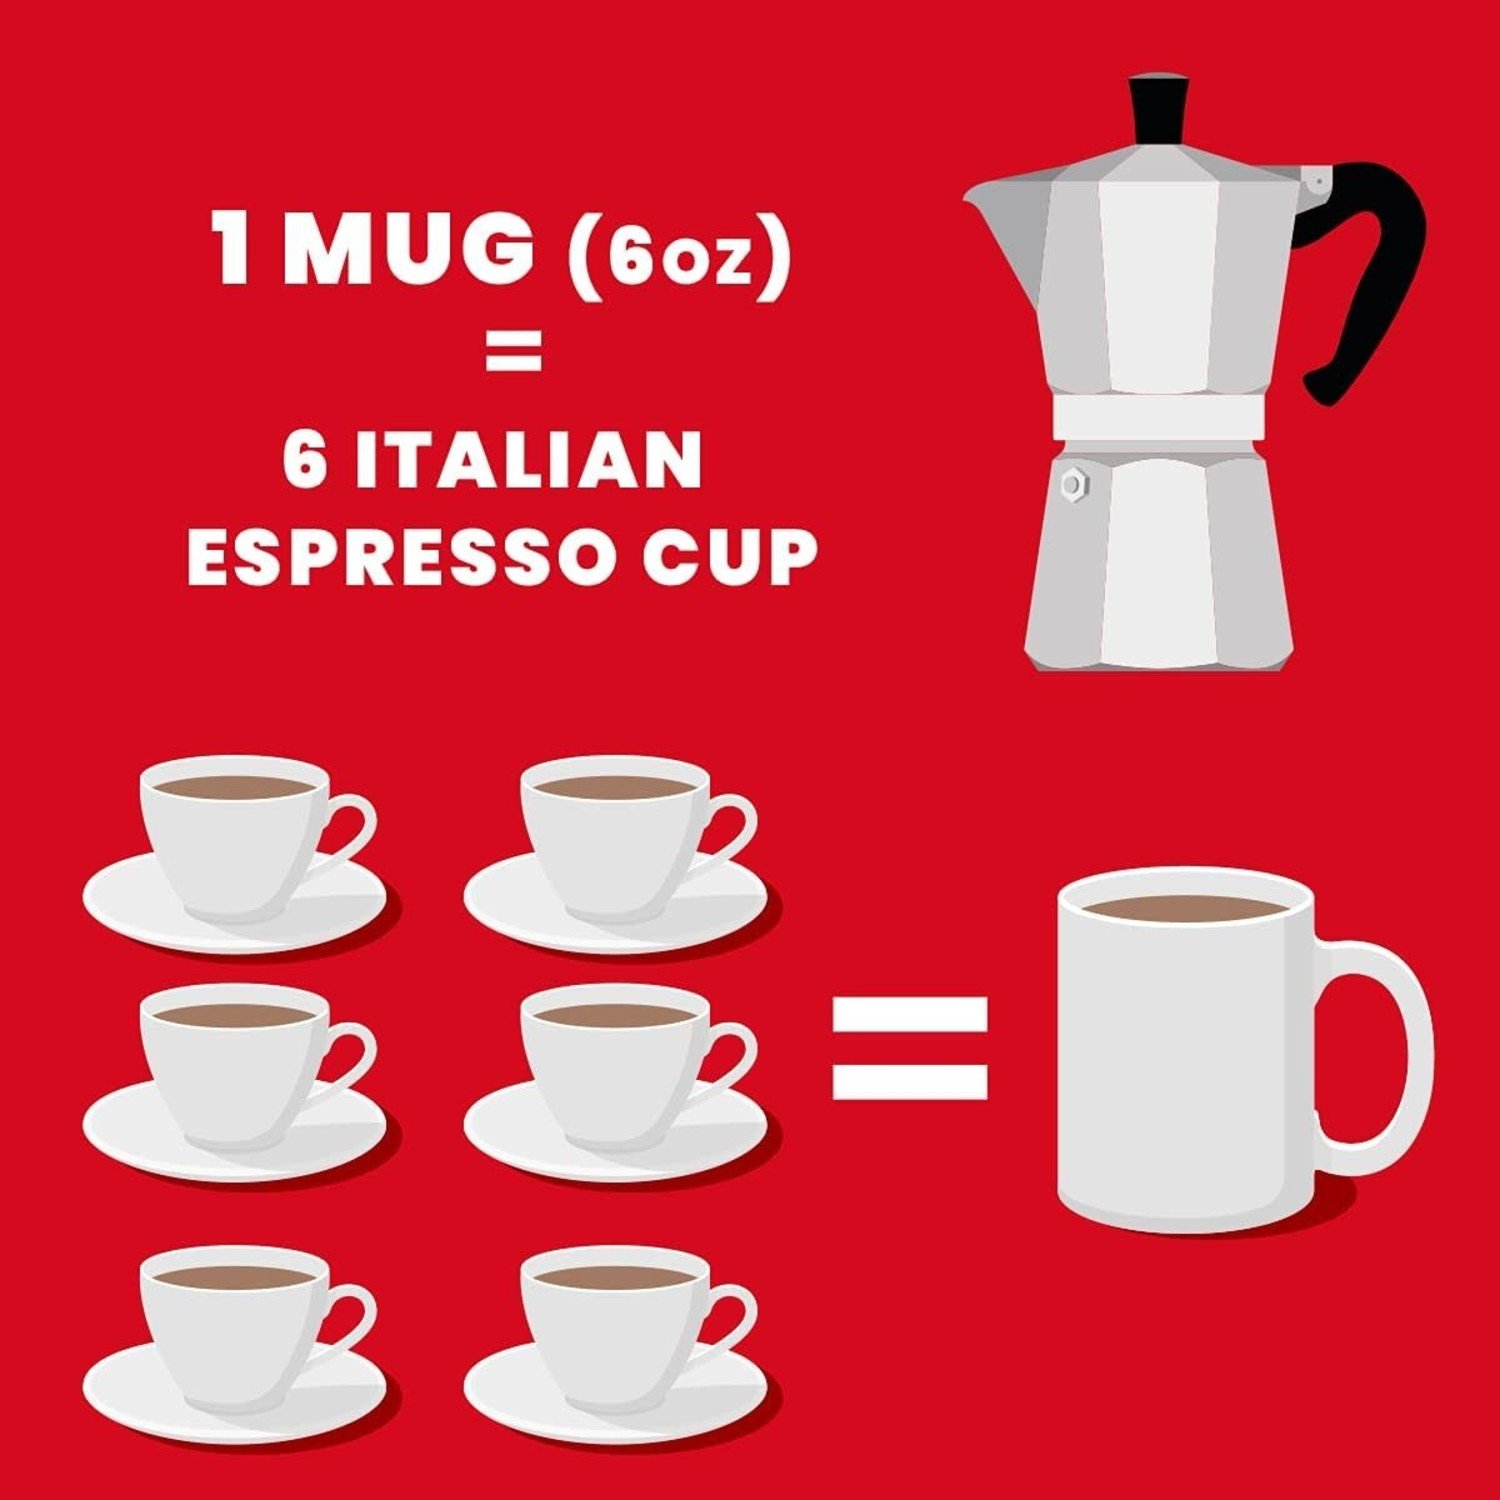 Bialetti Moka Express 6 cups coffee maker